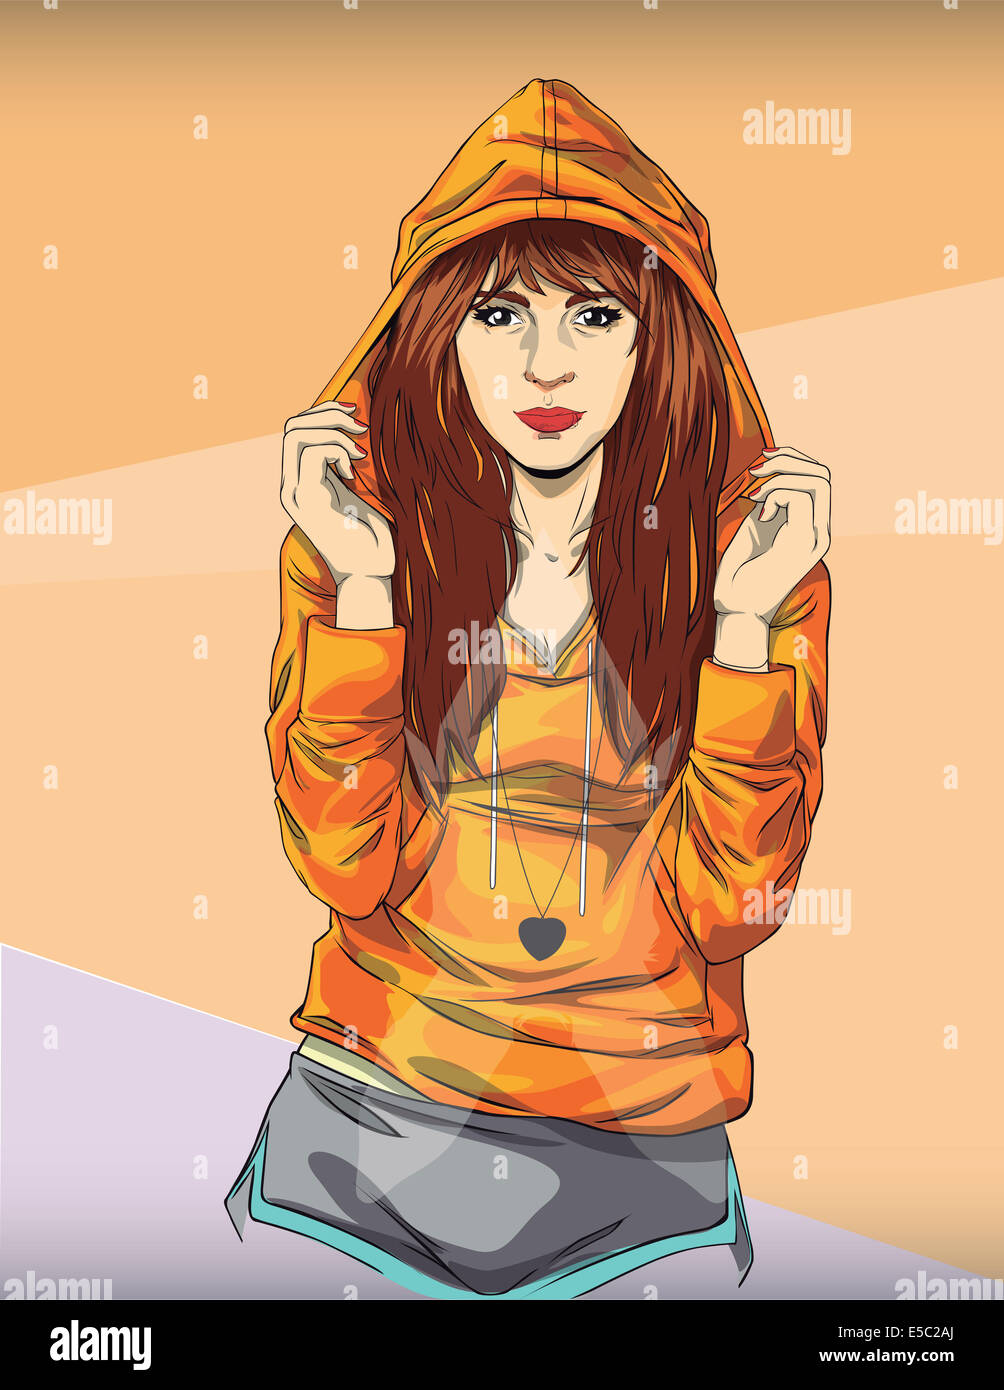 Illustration of trendy teenage girl in orange hooded jacket against colored background Stock Photo